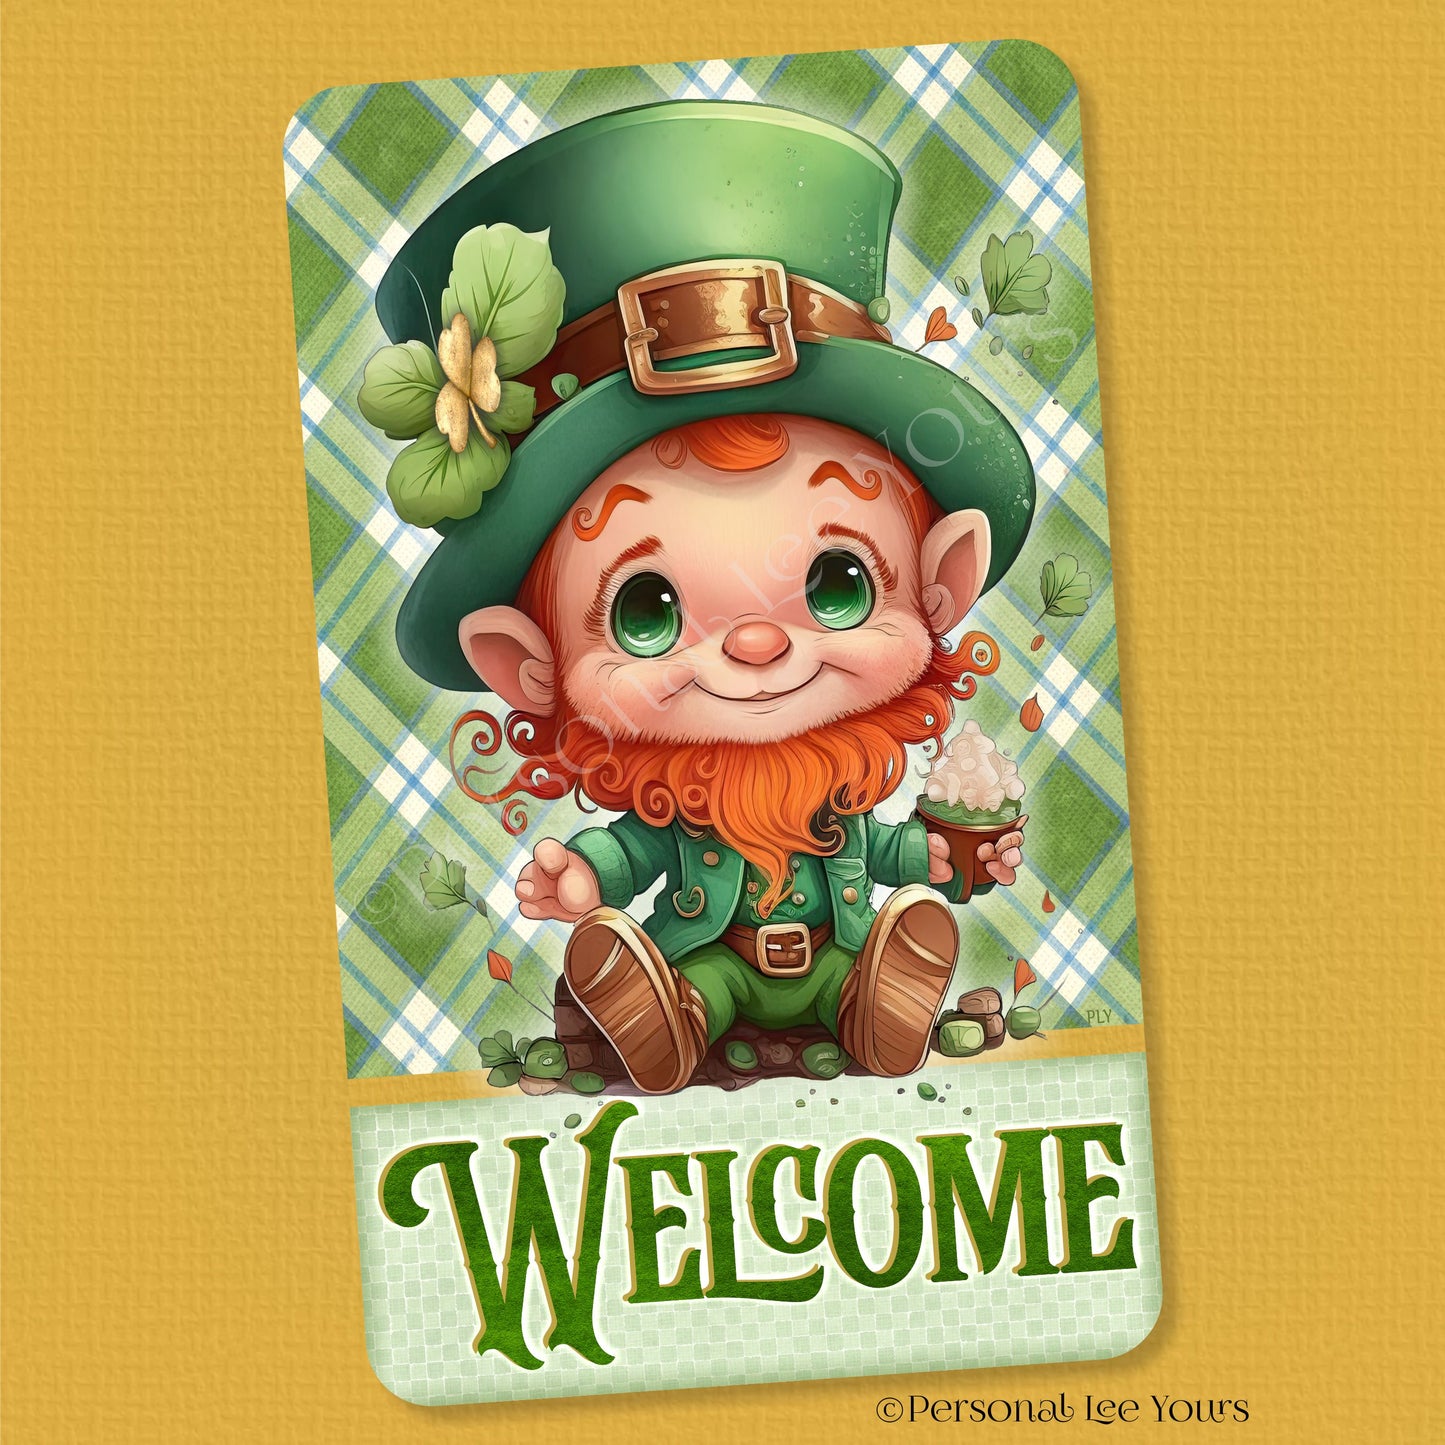 St. Patrick's Day Metal Wreath Sign * Leprechaun Welcome * Vertical * Lightweight